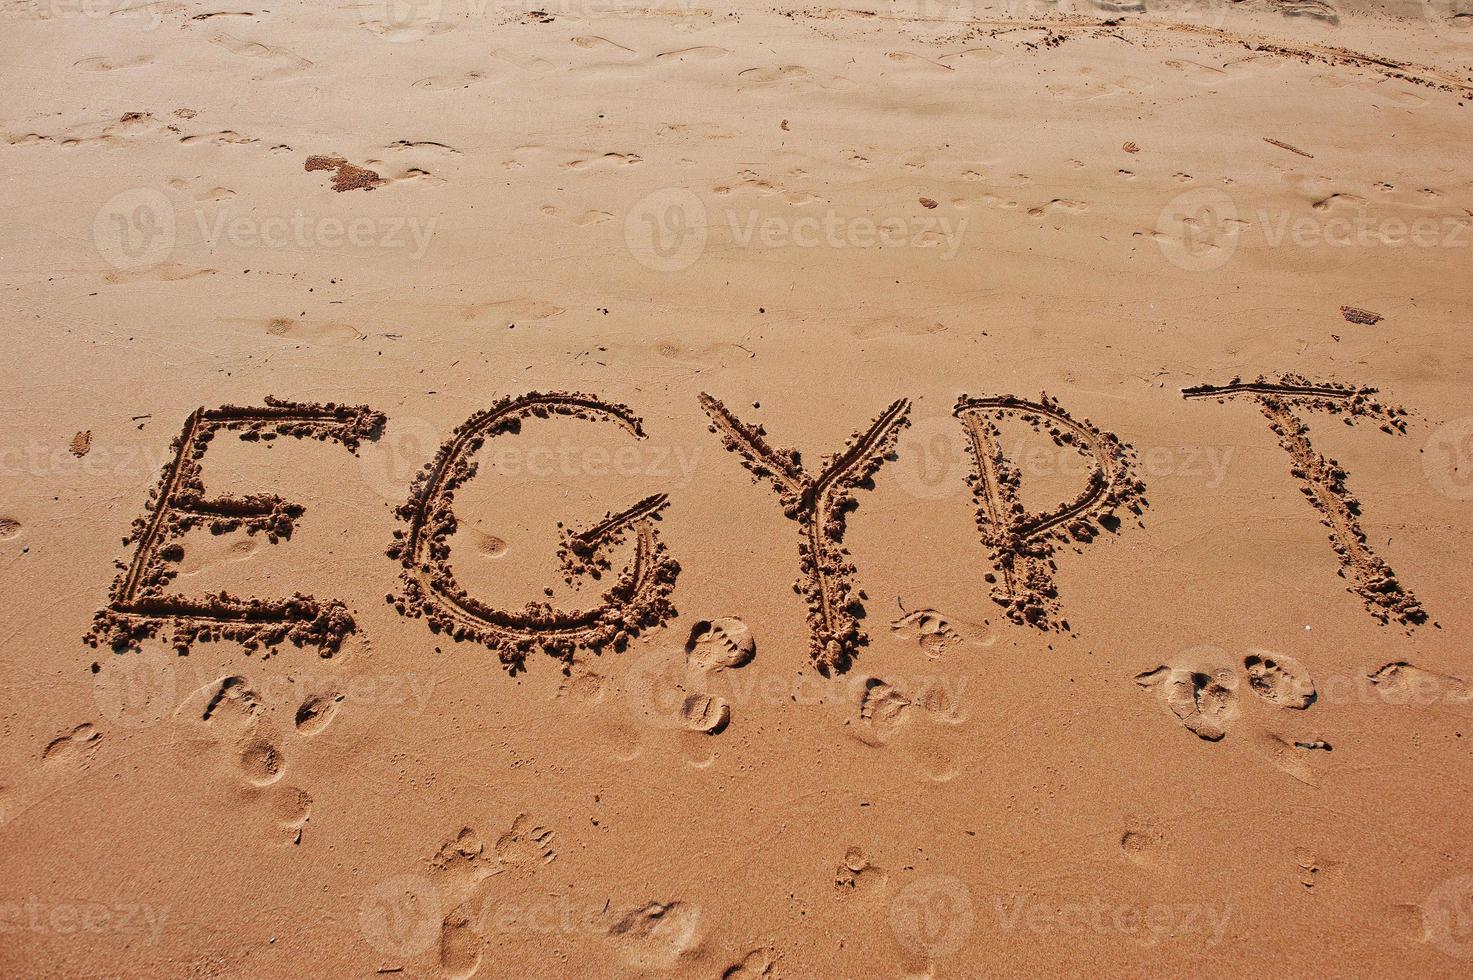 Ägypten in den Sand am Strand geschrieben foto